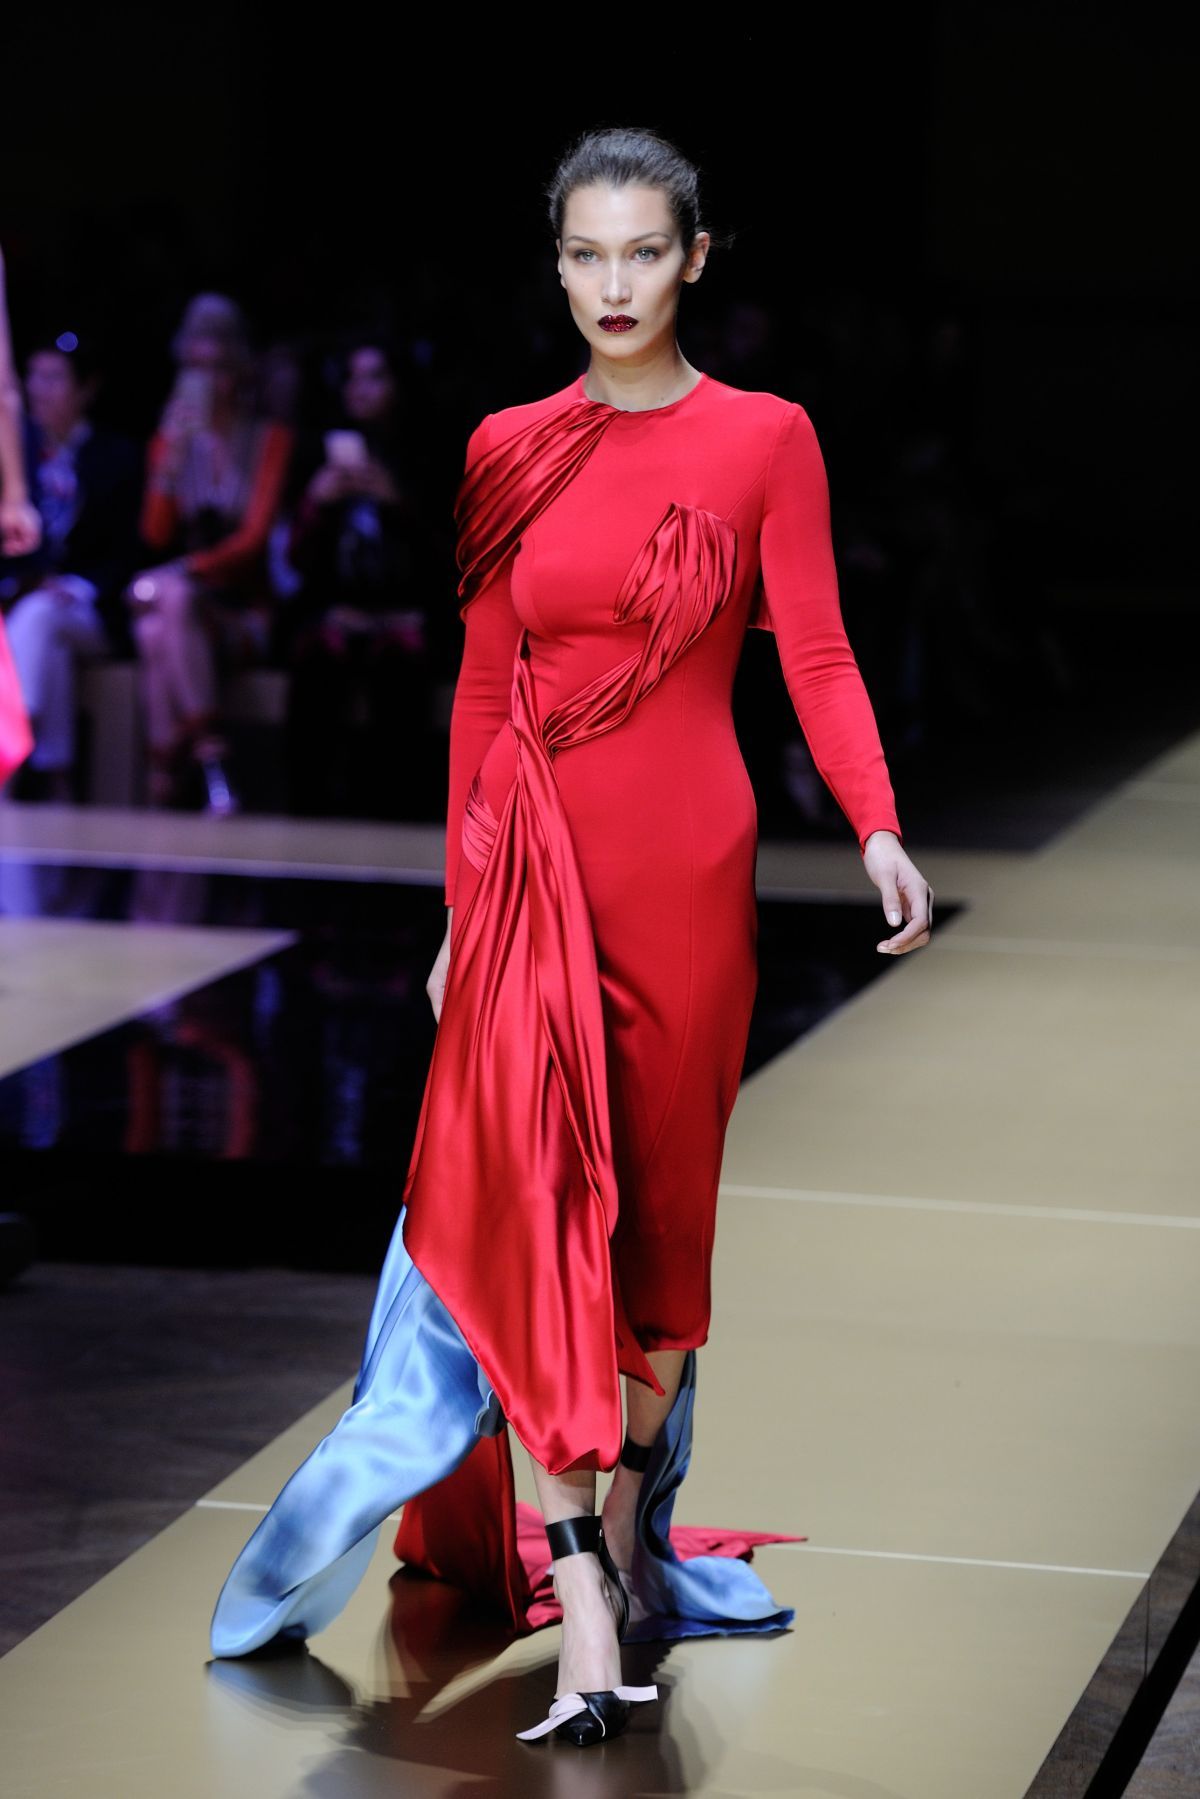 BELLA HADID Walks the Runway at Atelier Versace Fashion Show in Paris ...